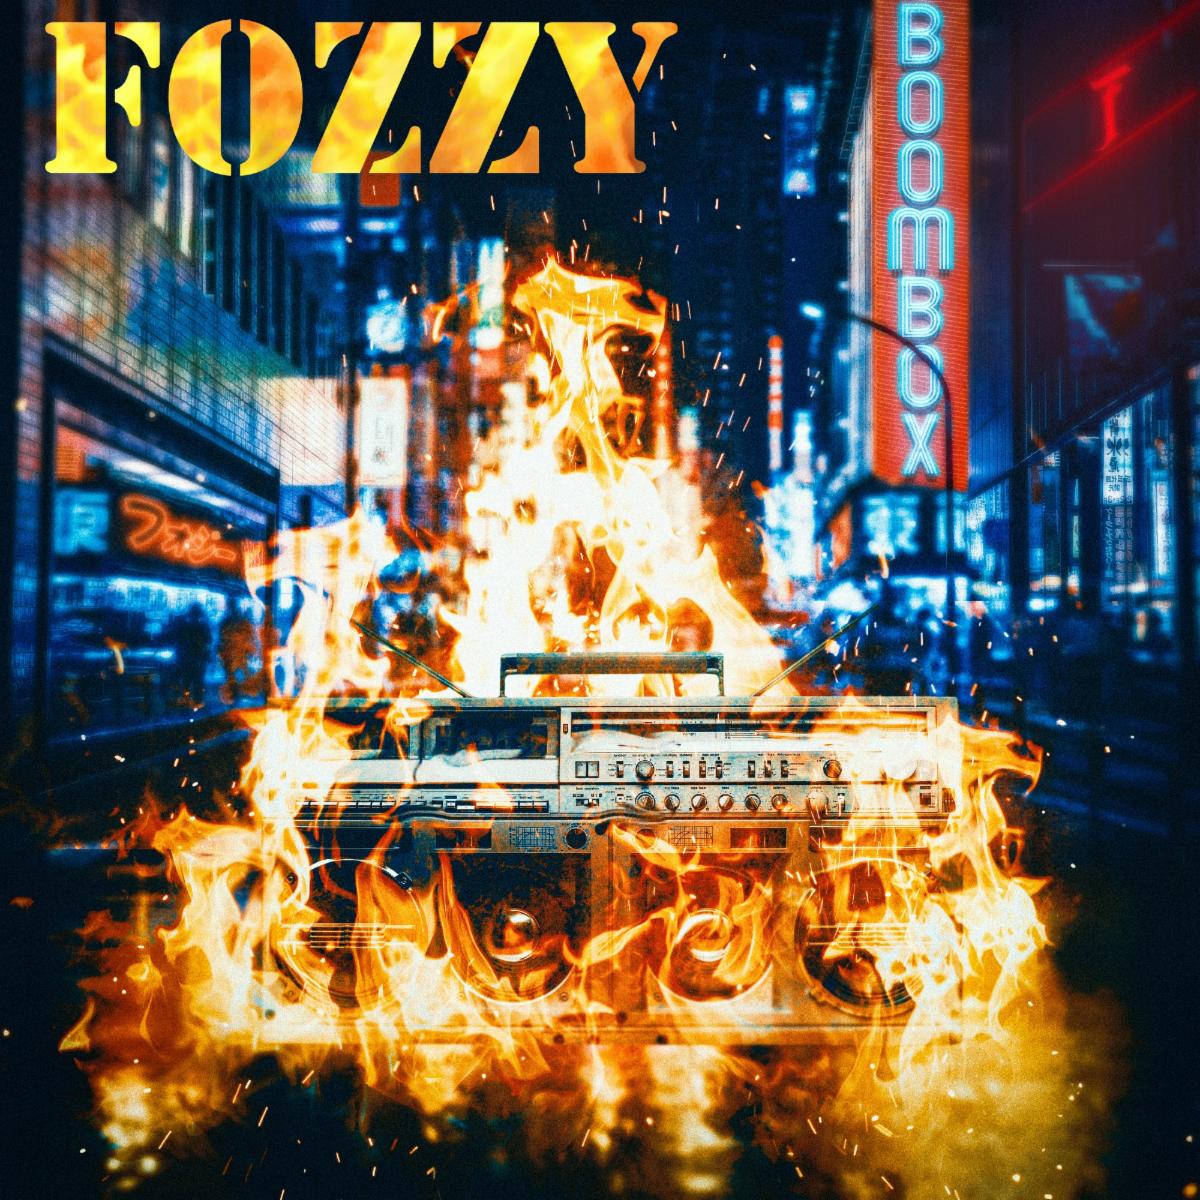 Fozzy - 'Boombox'